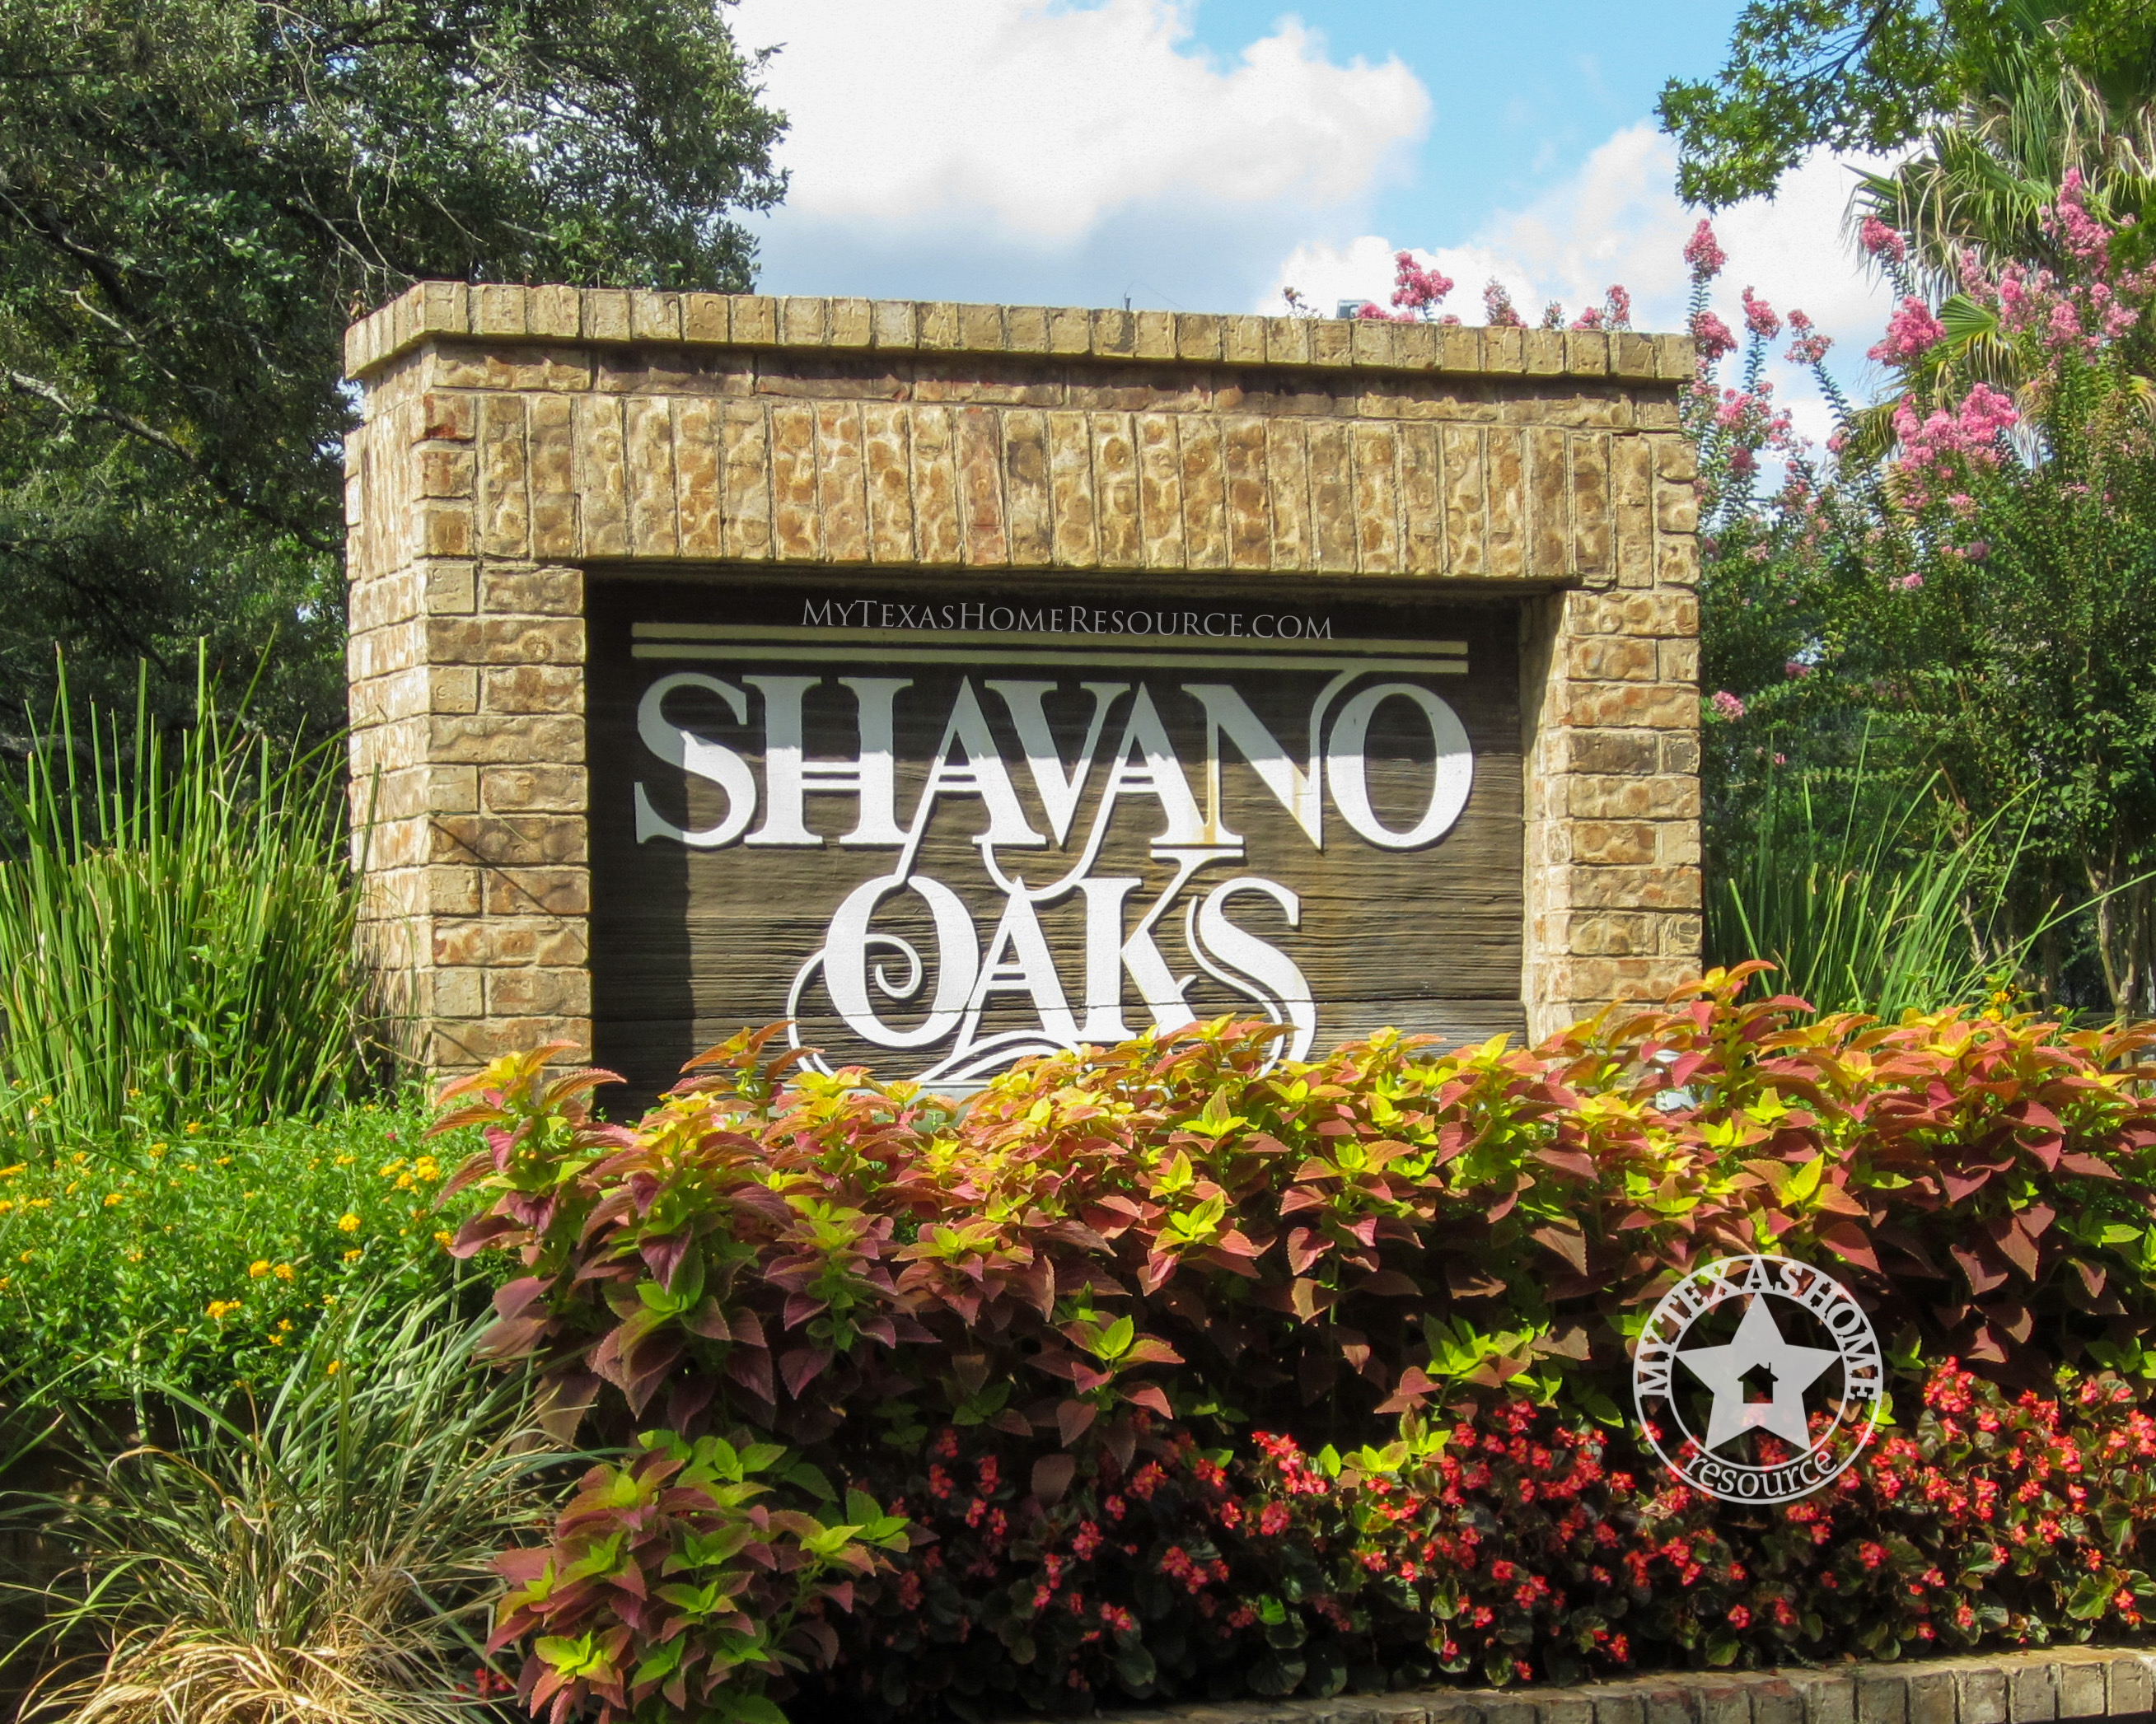 Shavano橡树社区网上正规的彩票网站，德克萨斯州